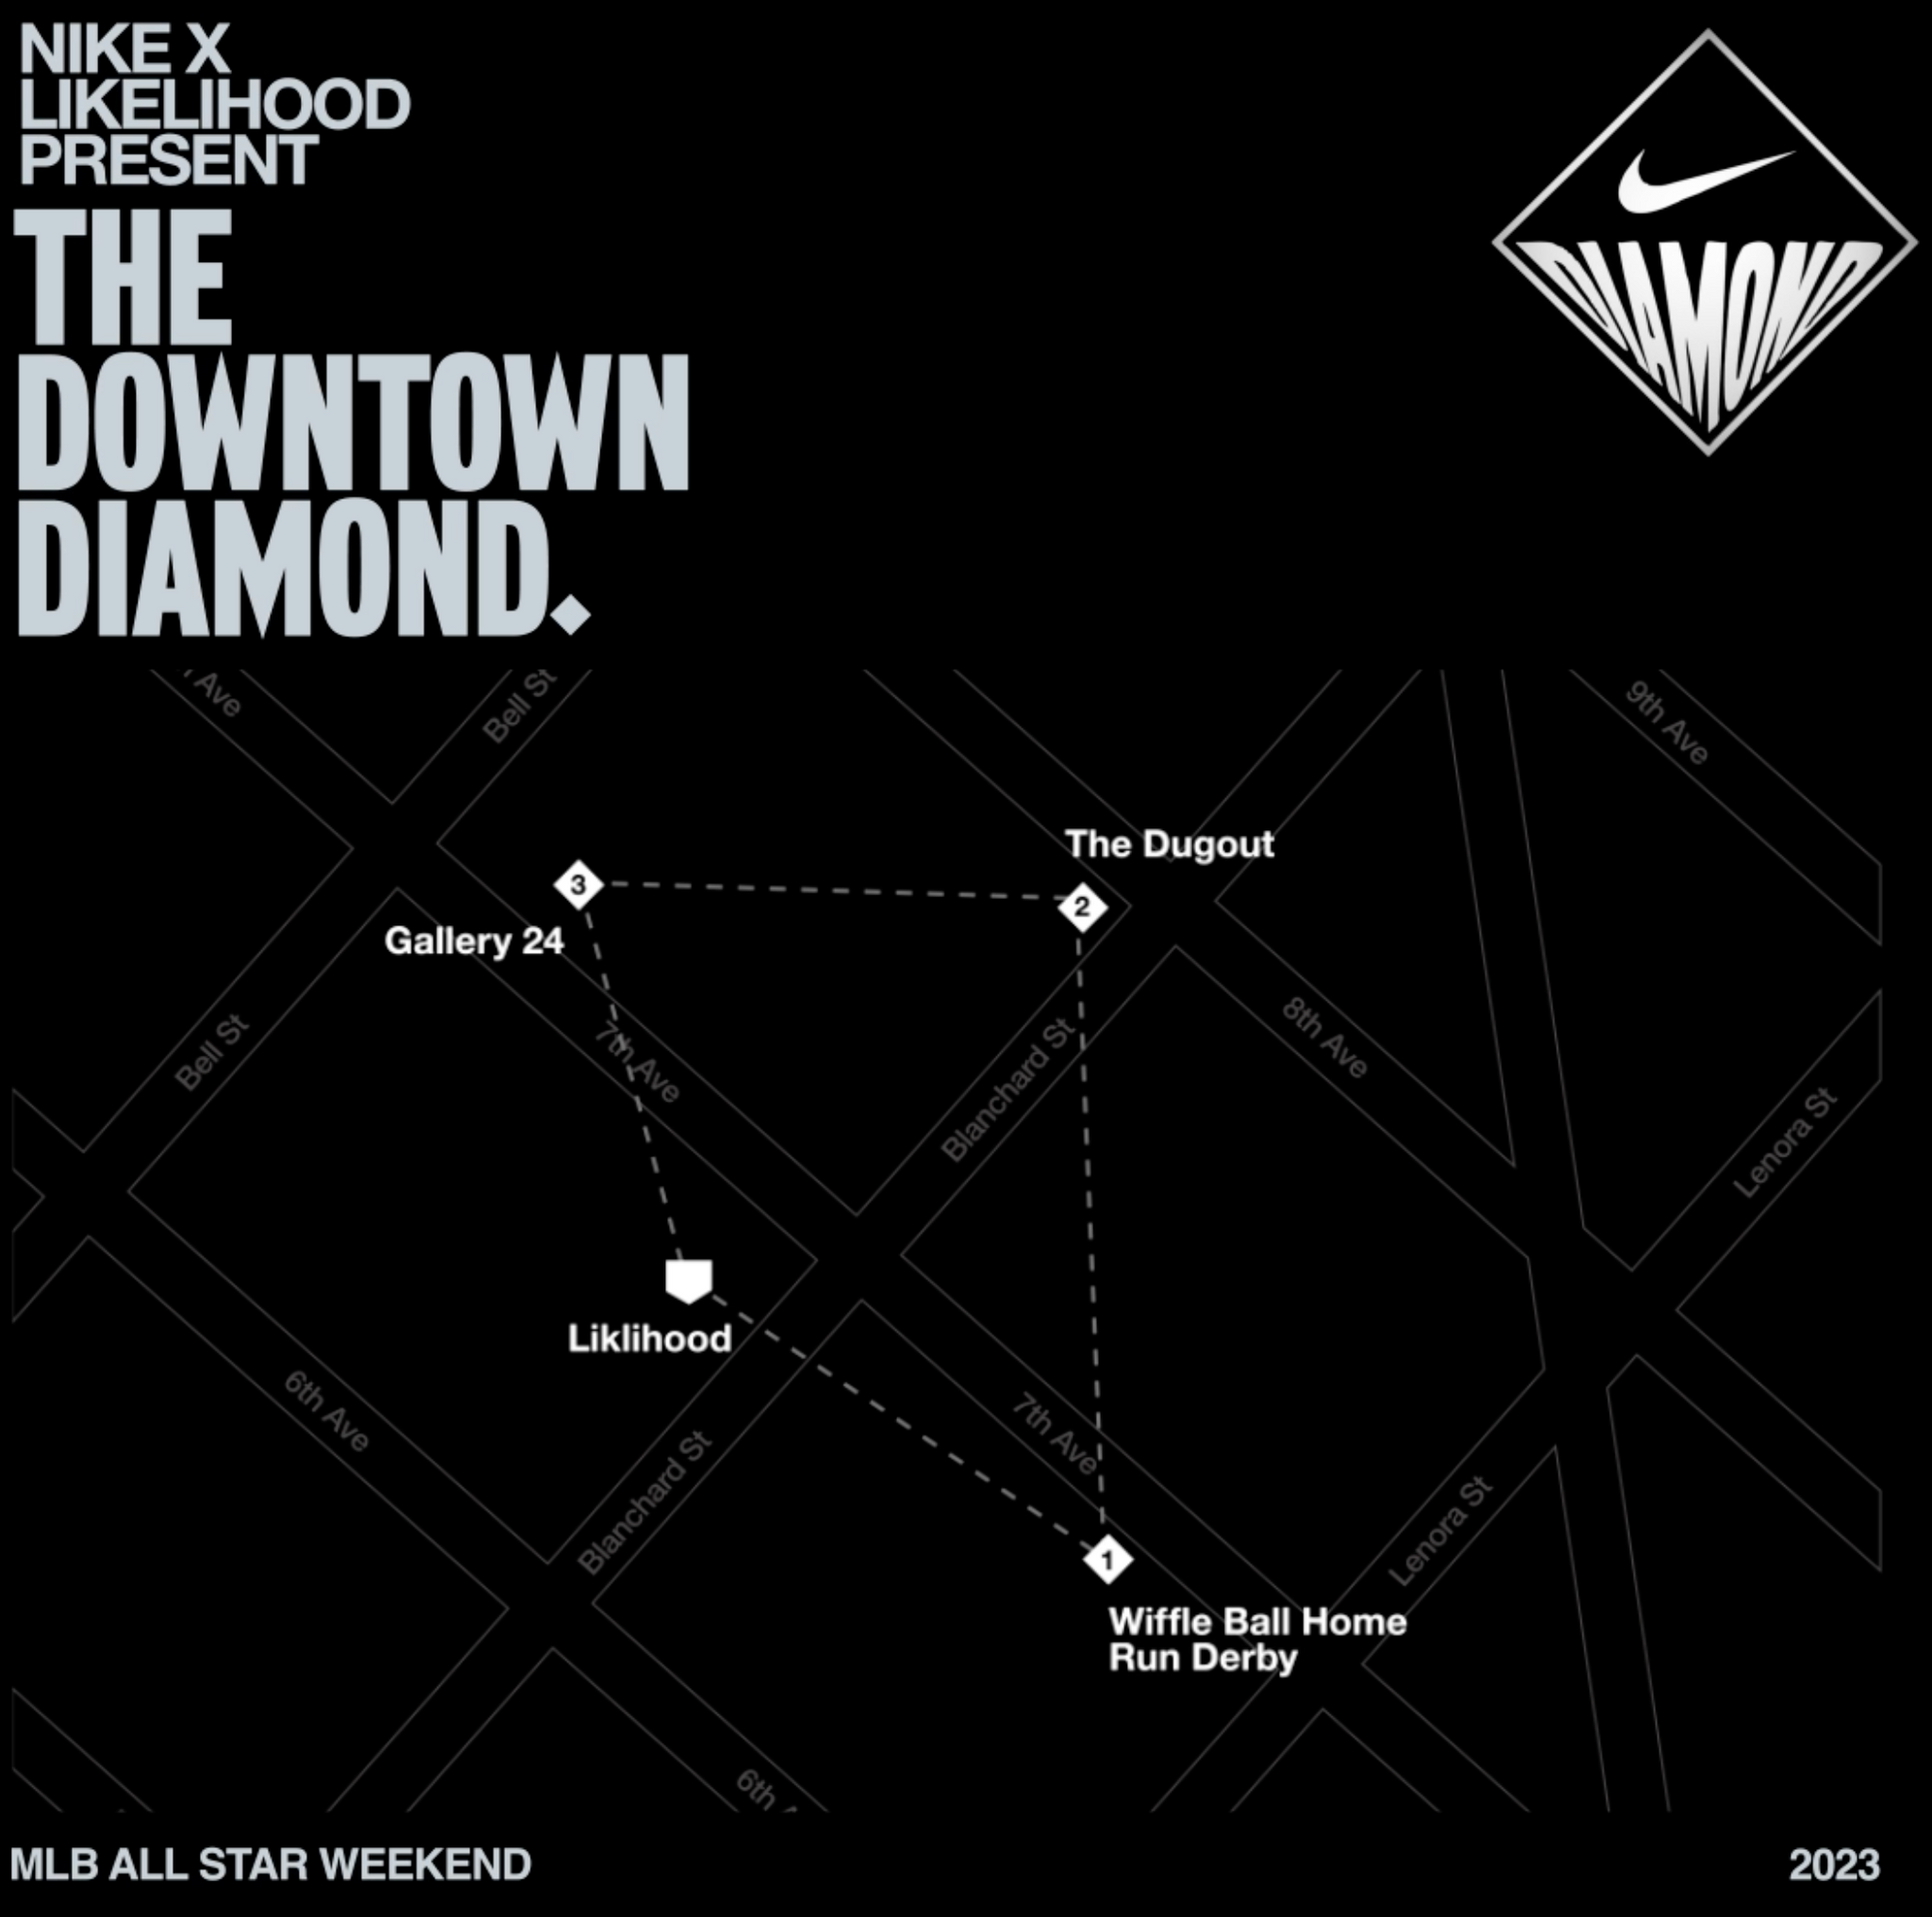 Nike x LIKELIHOOD Present The Downtown Diamond